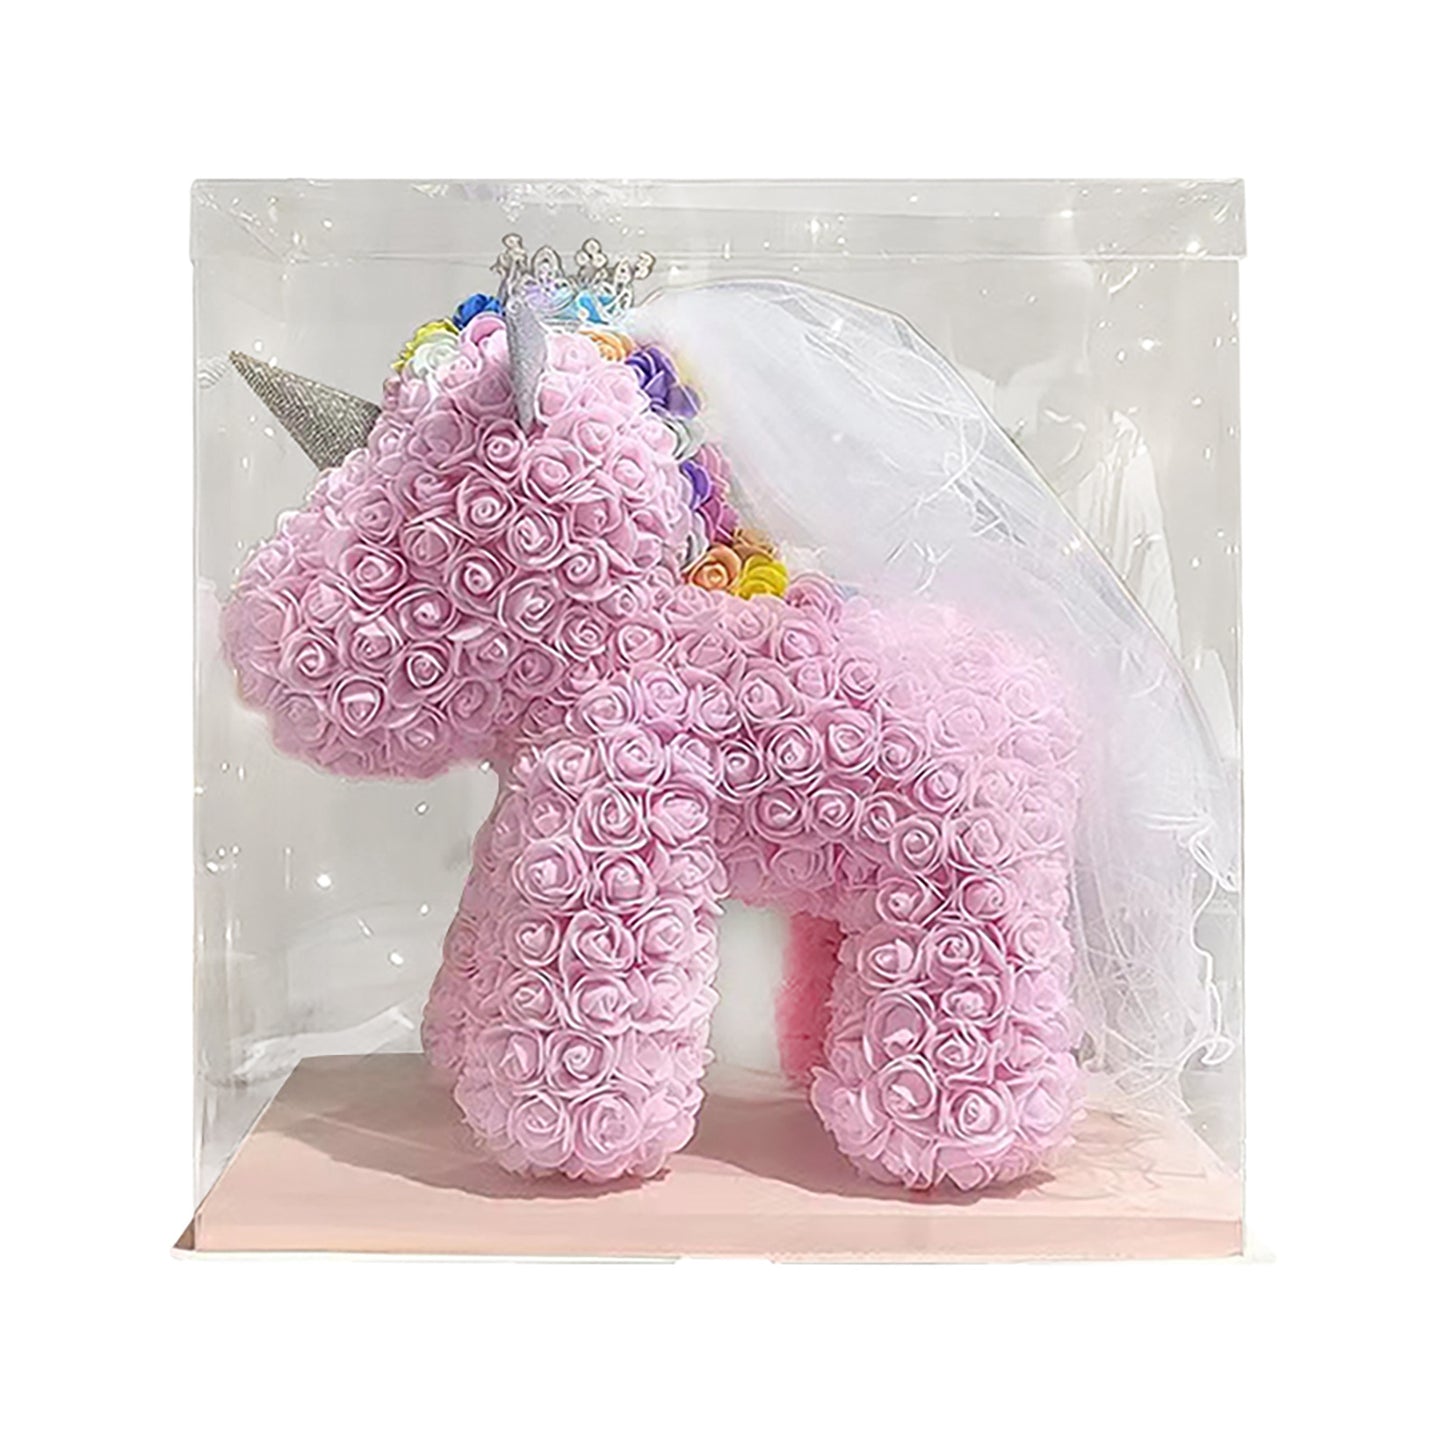 Halloween rose unicorn gifts, romantic unicorn gifts for girls women 11-pack